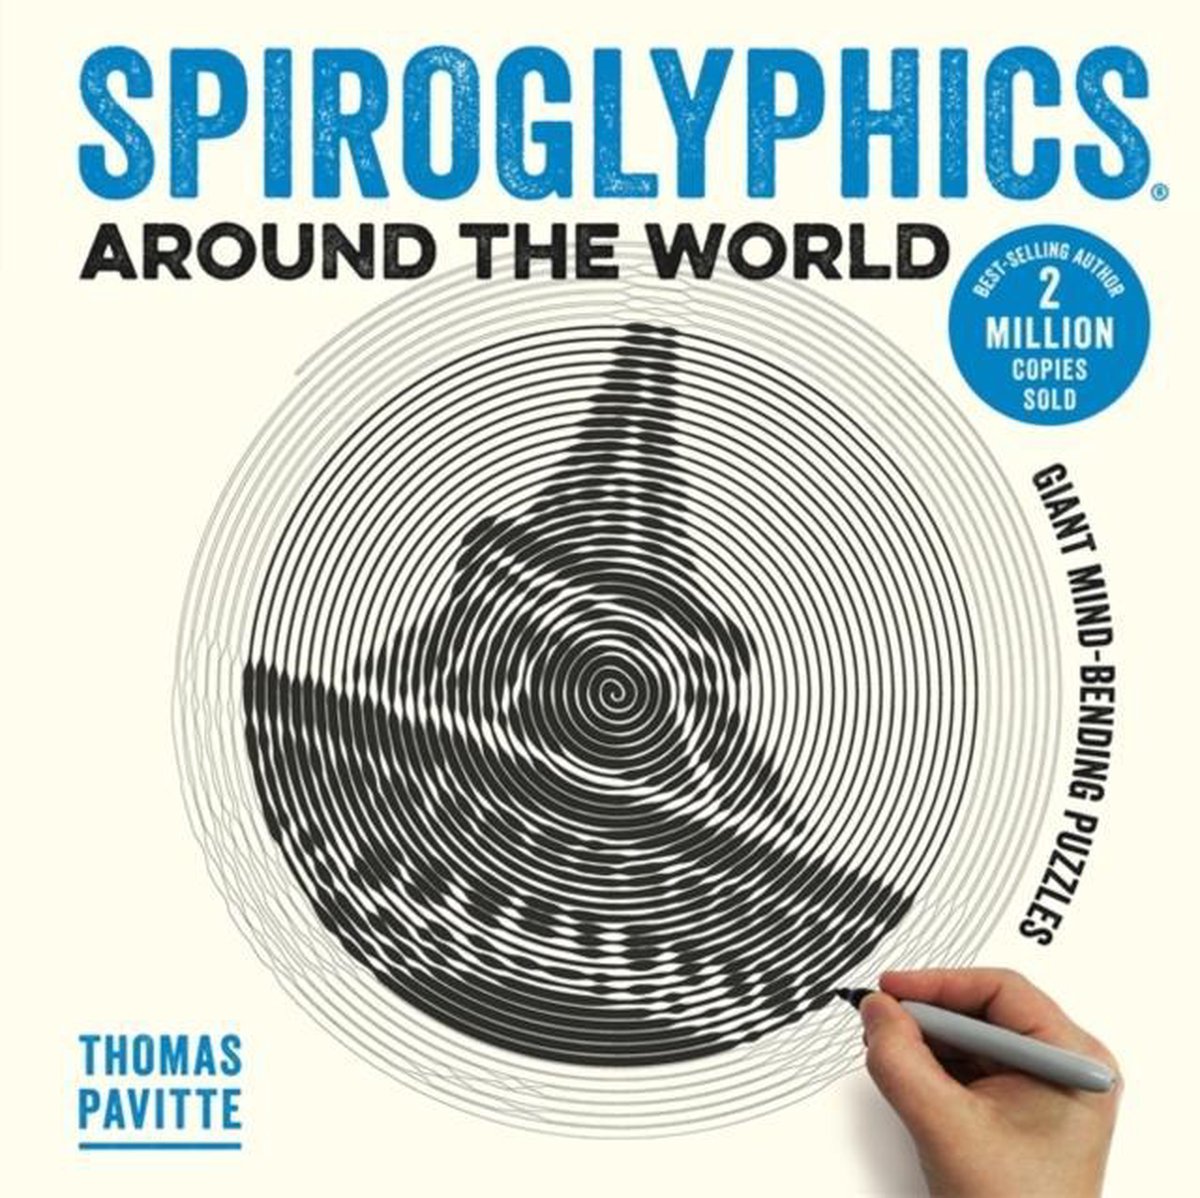 Spiroglyphics Around the World - Thomas Pavitte